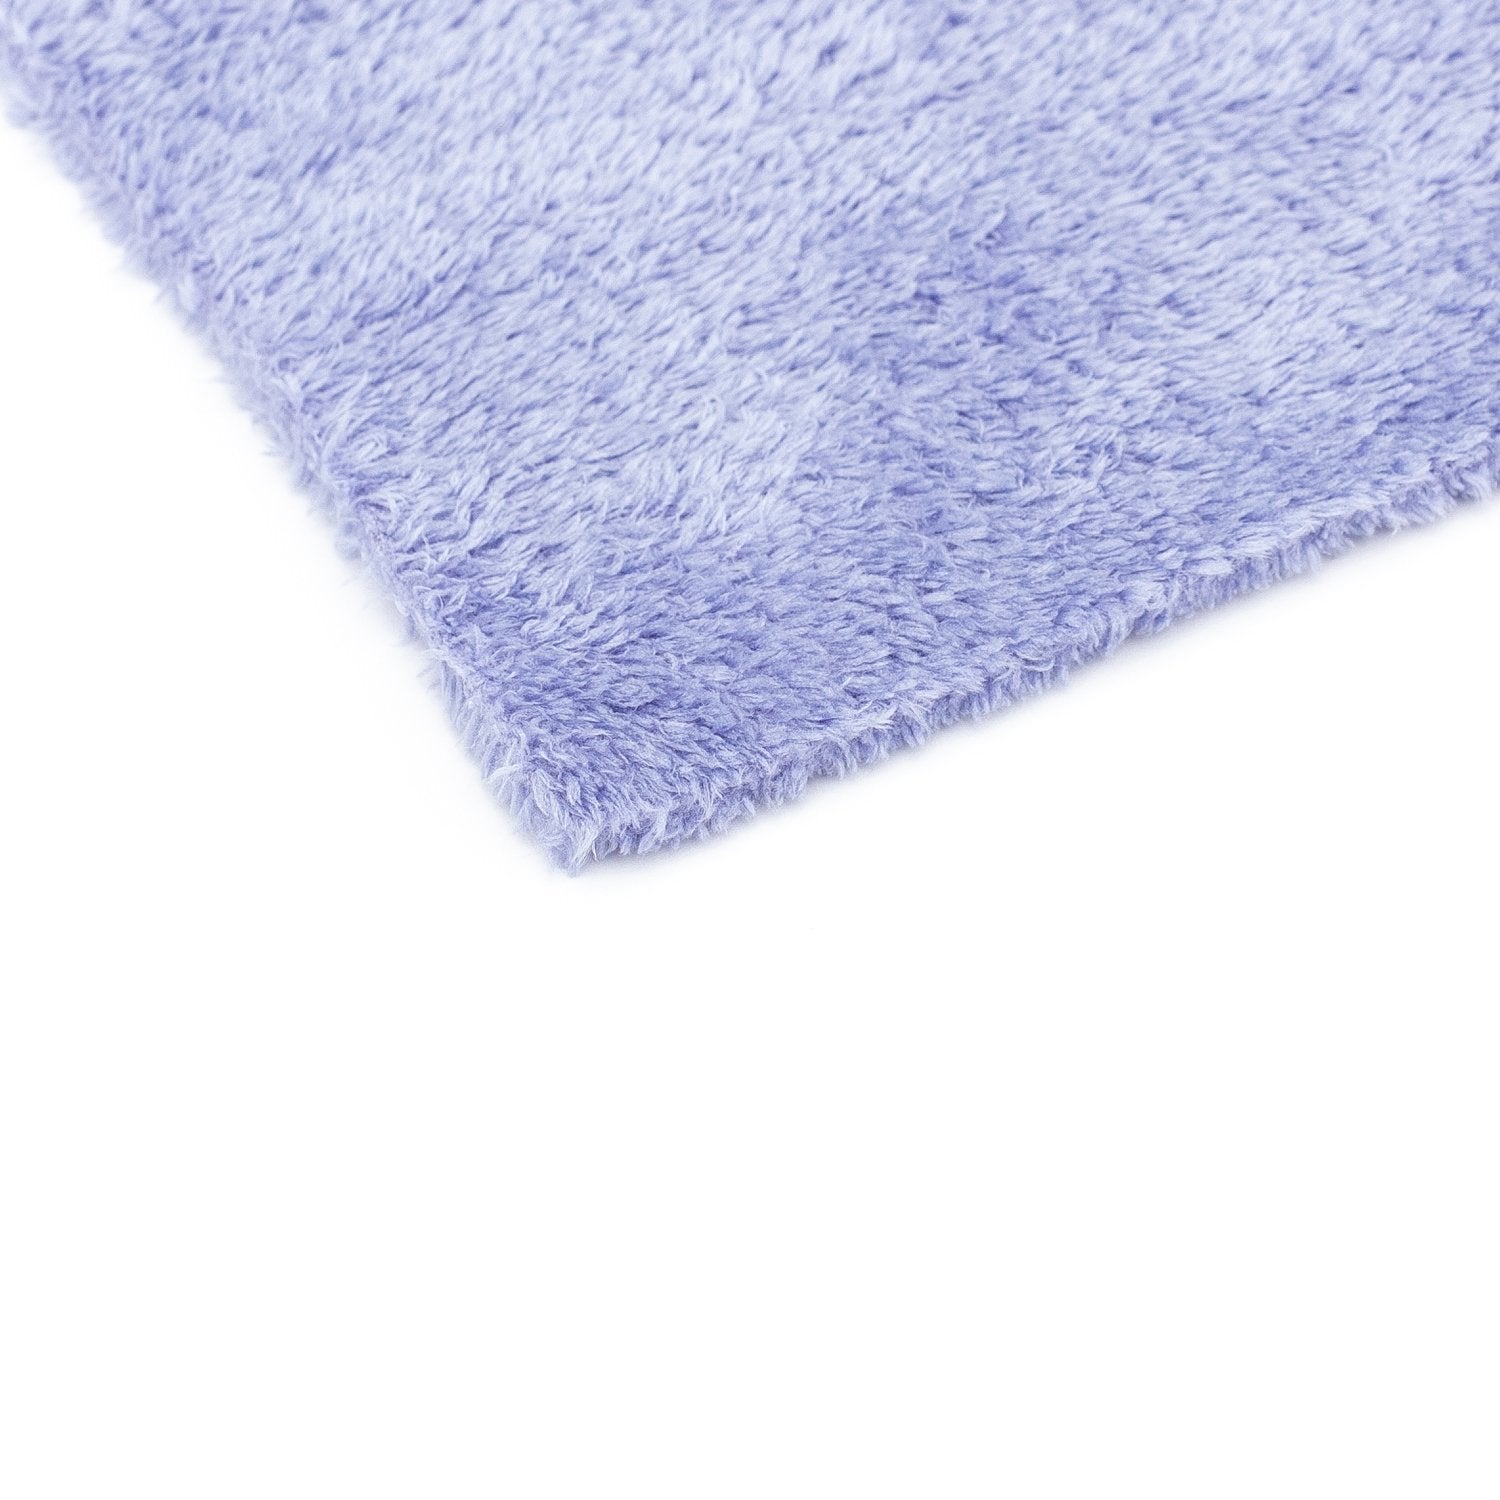 8x8 Microfiber Cloth - Small Microfiber Towel - Free Shipping